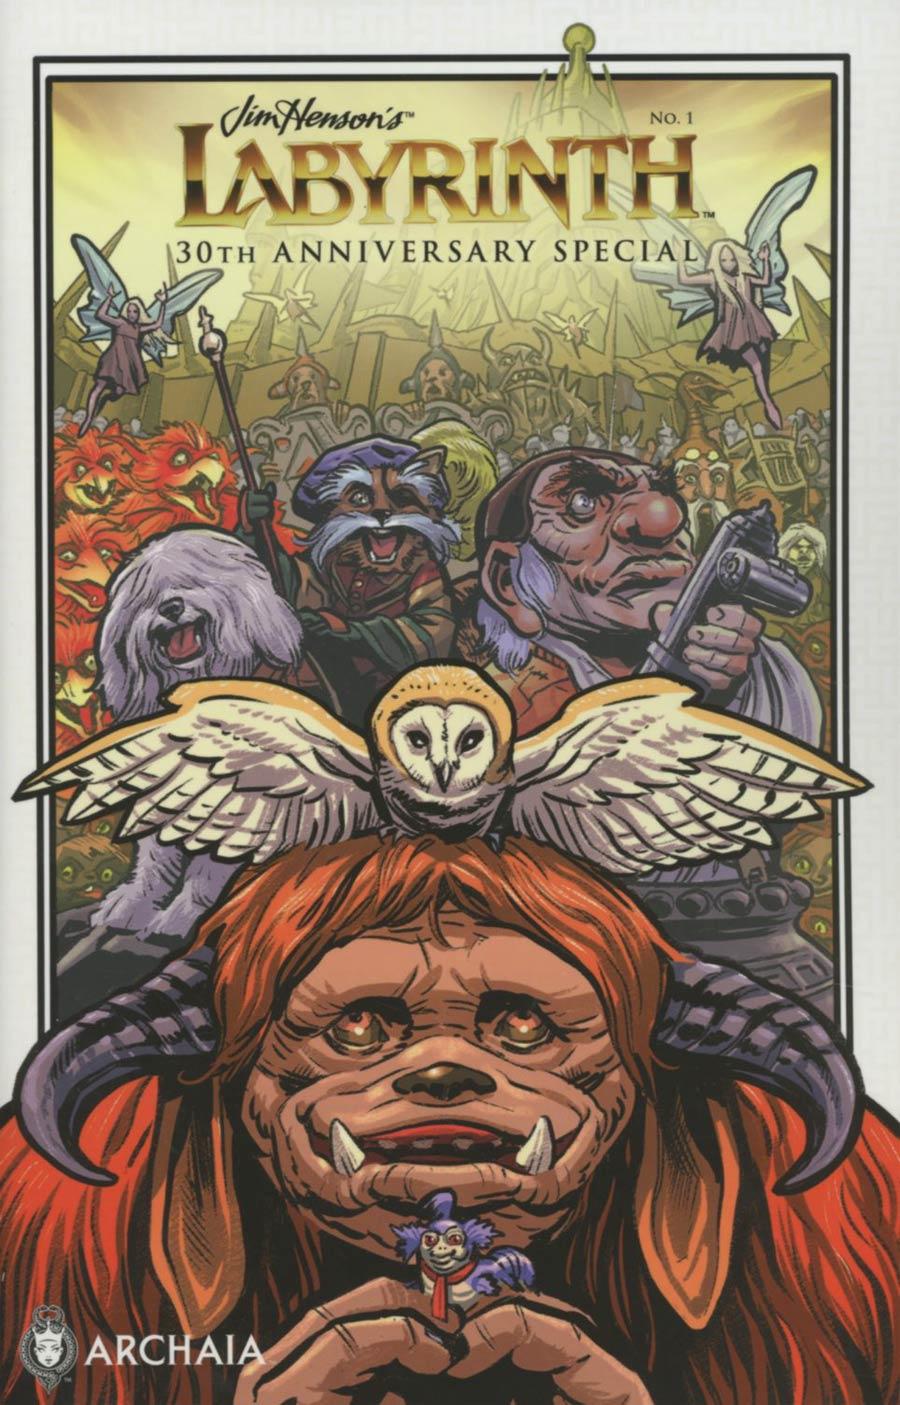 Jim Hensons Labyrinth 30th Anniversary Special Vol. 1 #1